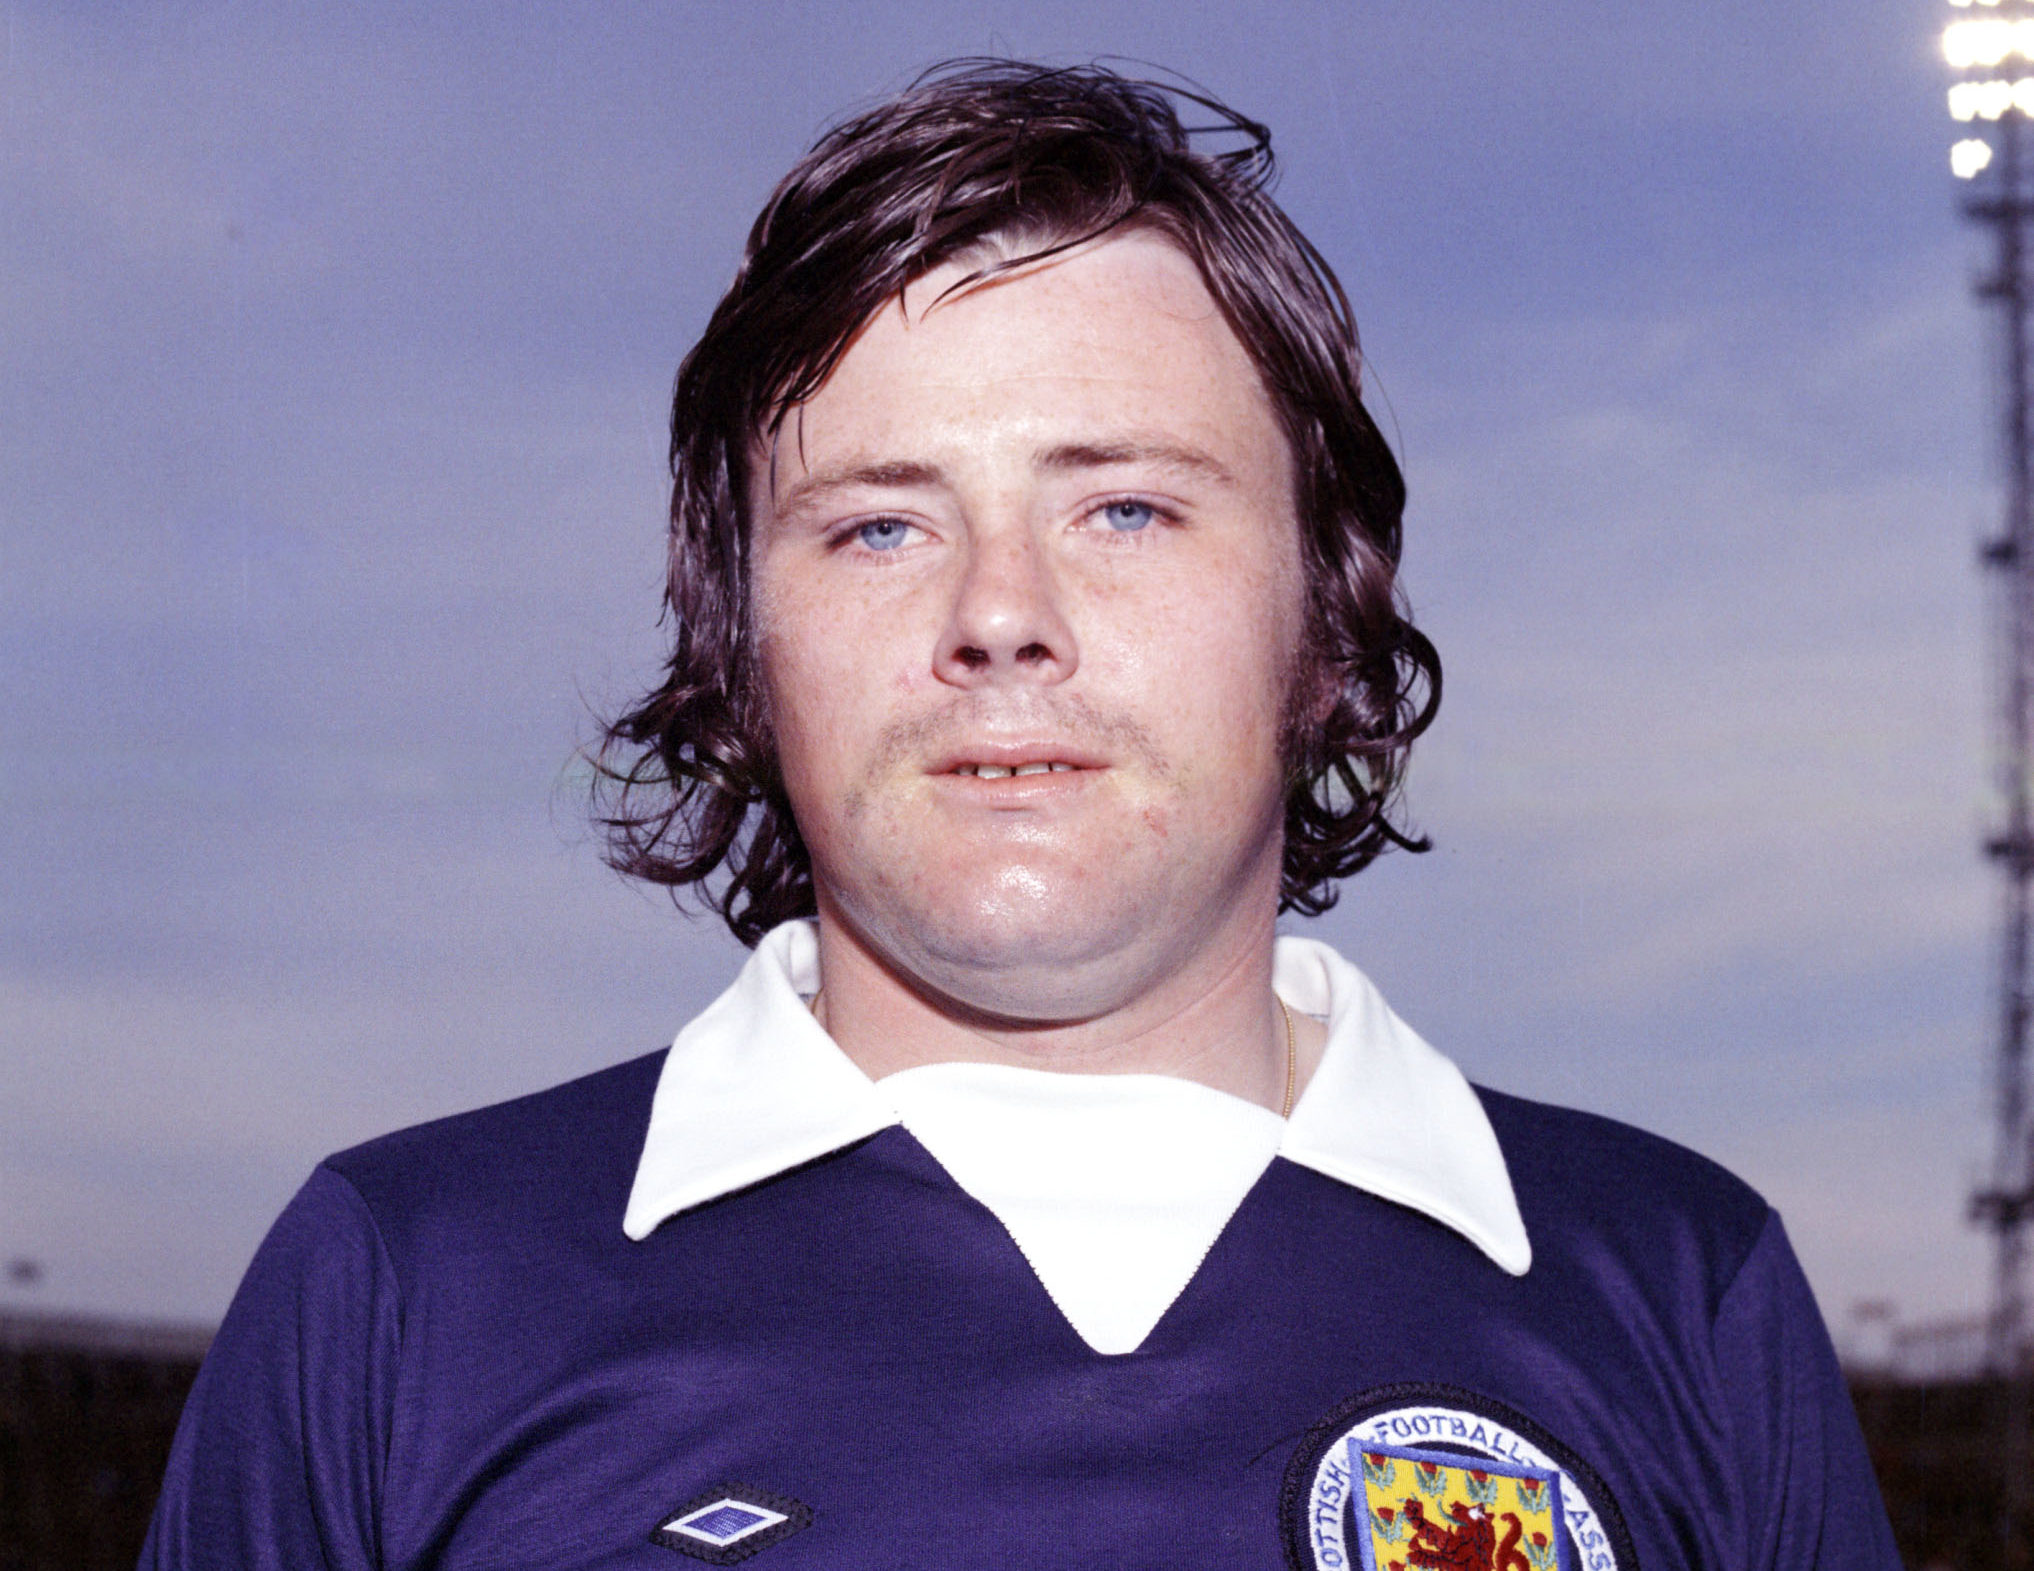 1974/1975
Scotland's Pat McCluskey